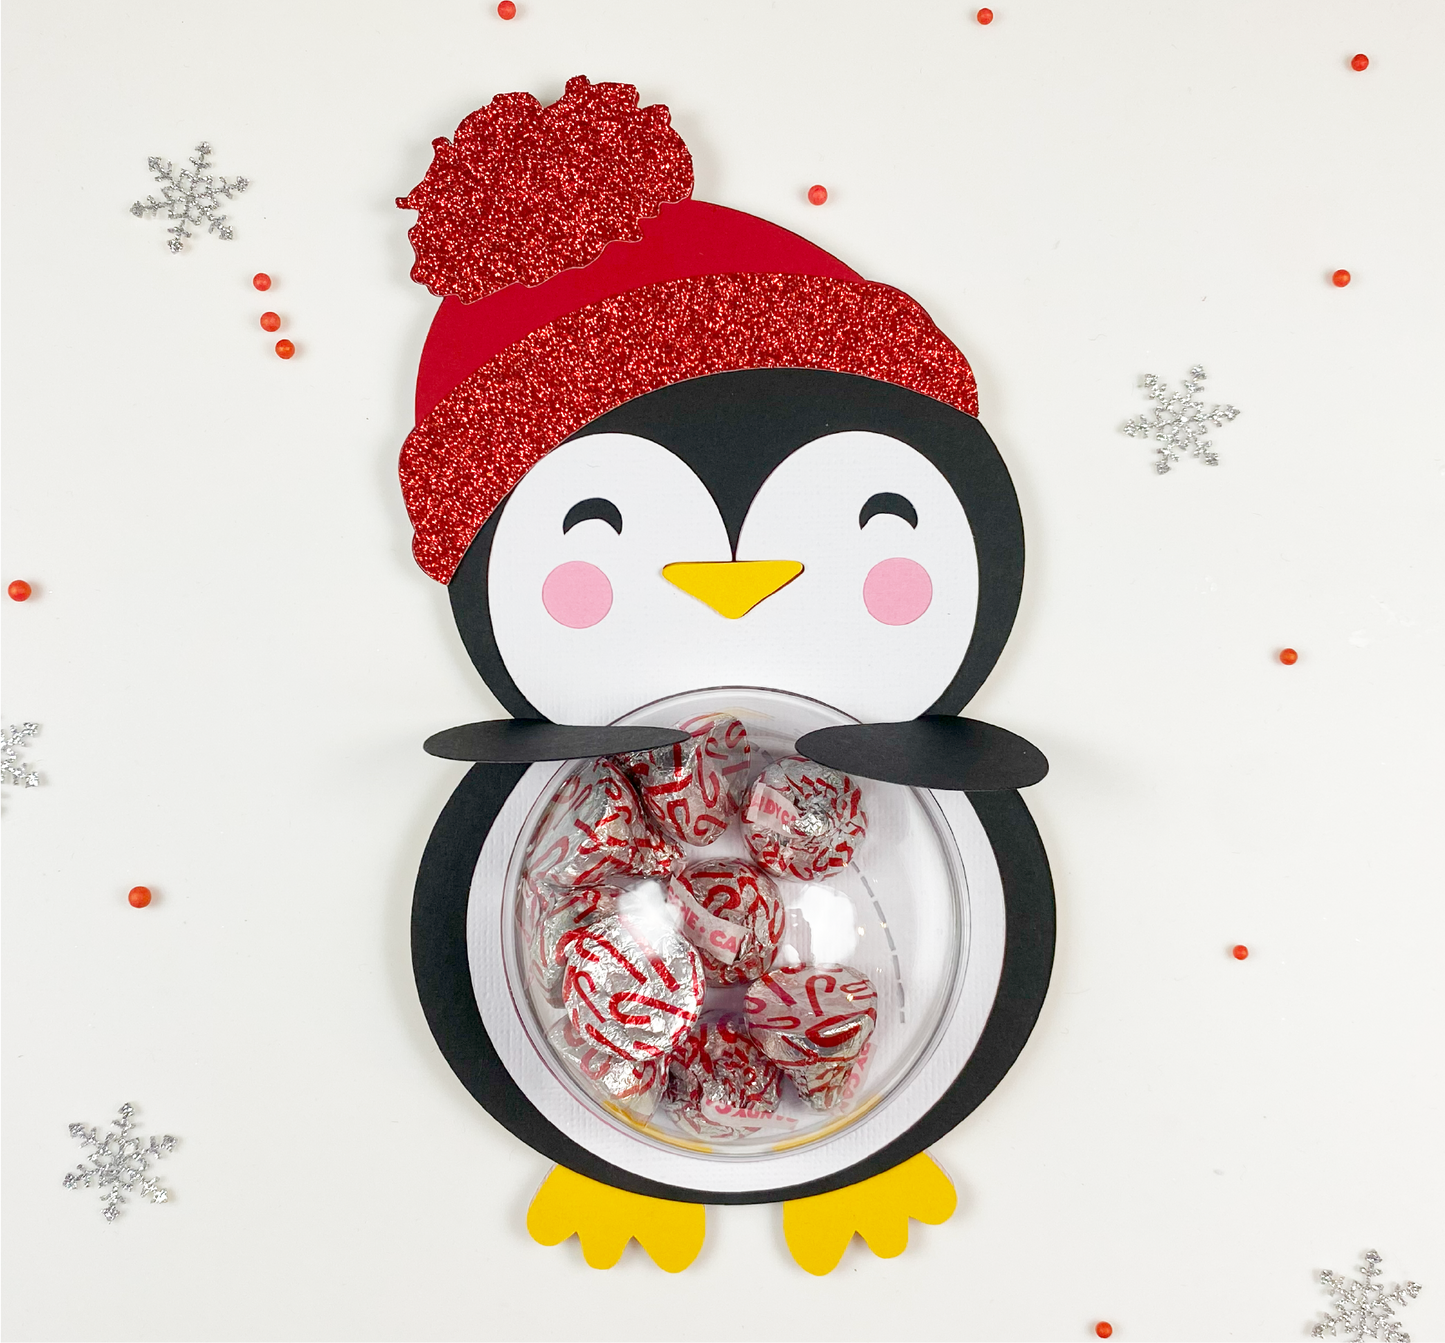 Penguin with Hat Candy Holder SVG File